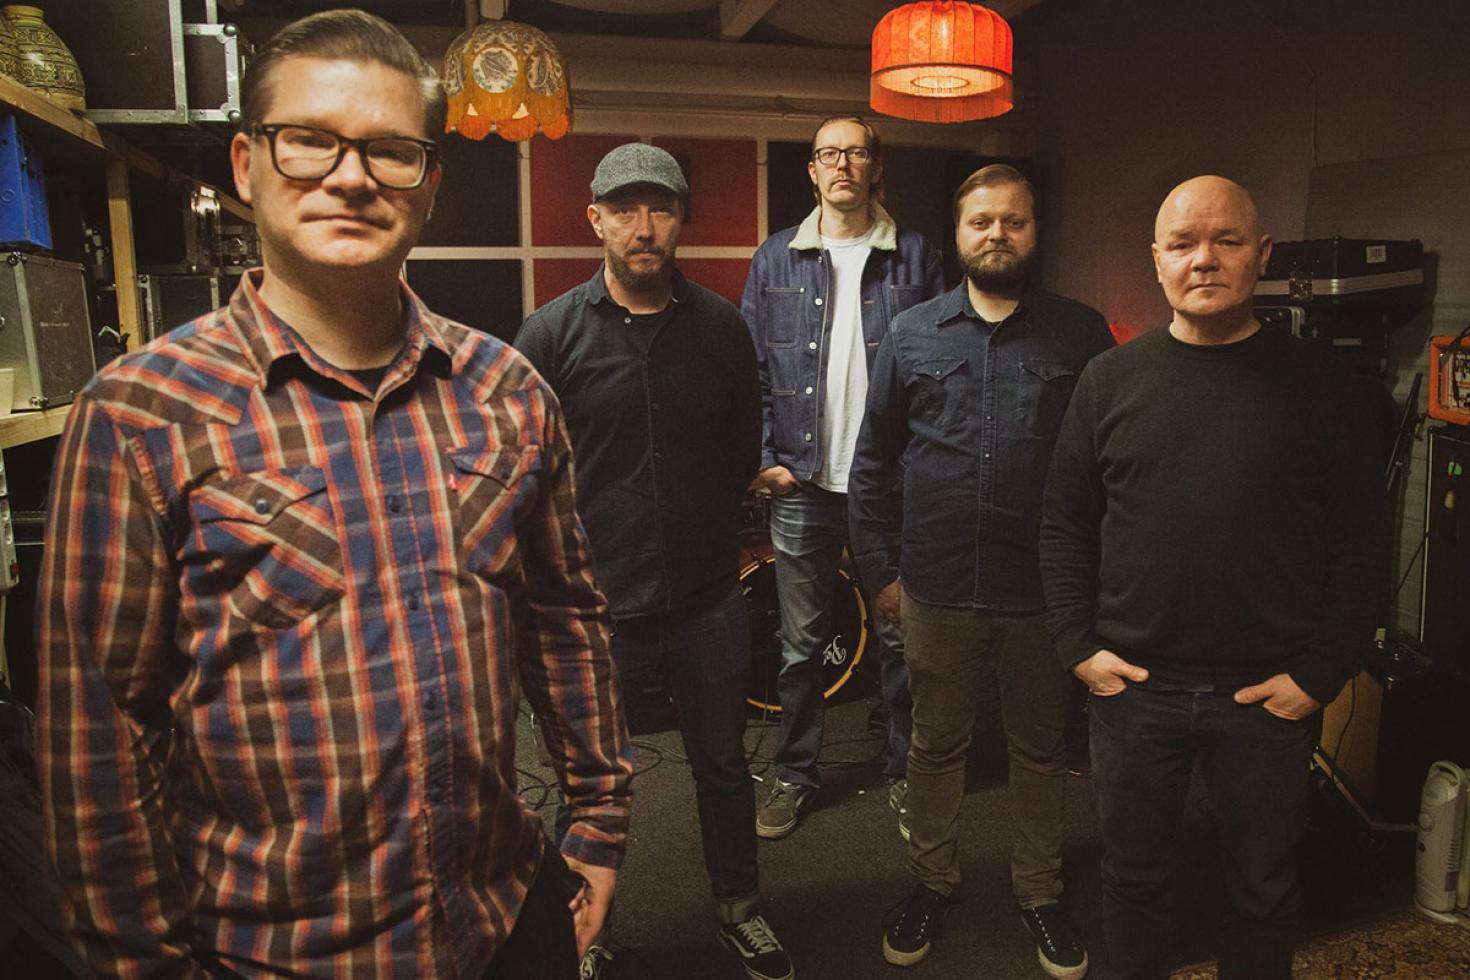 PREMIERE: Stream Finland’s Custody new album ‘ll’ in full